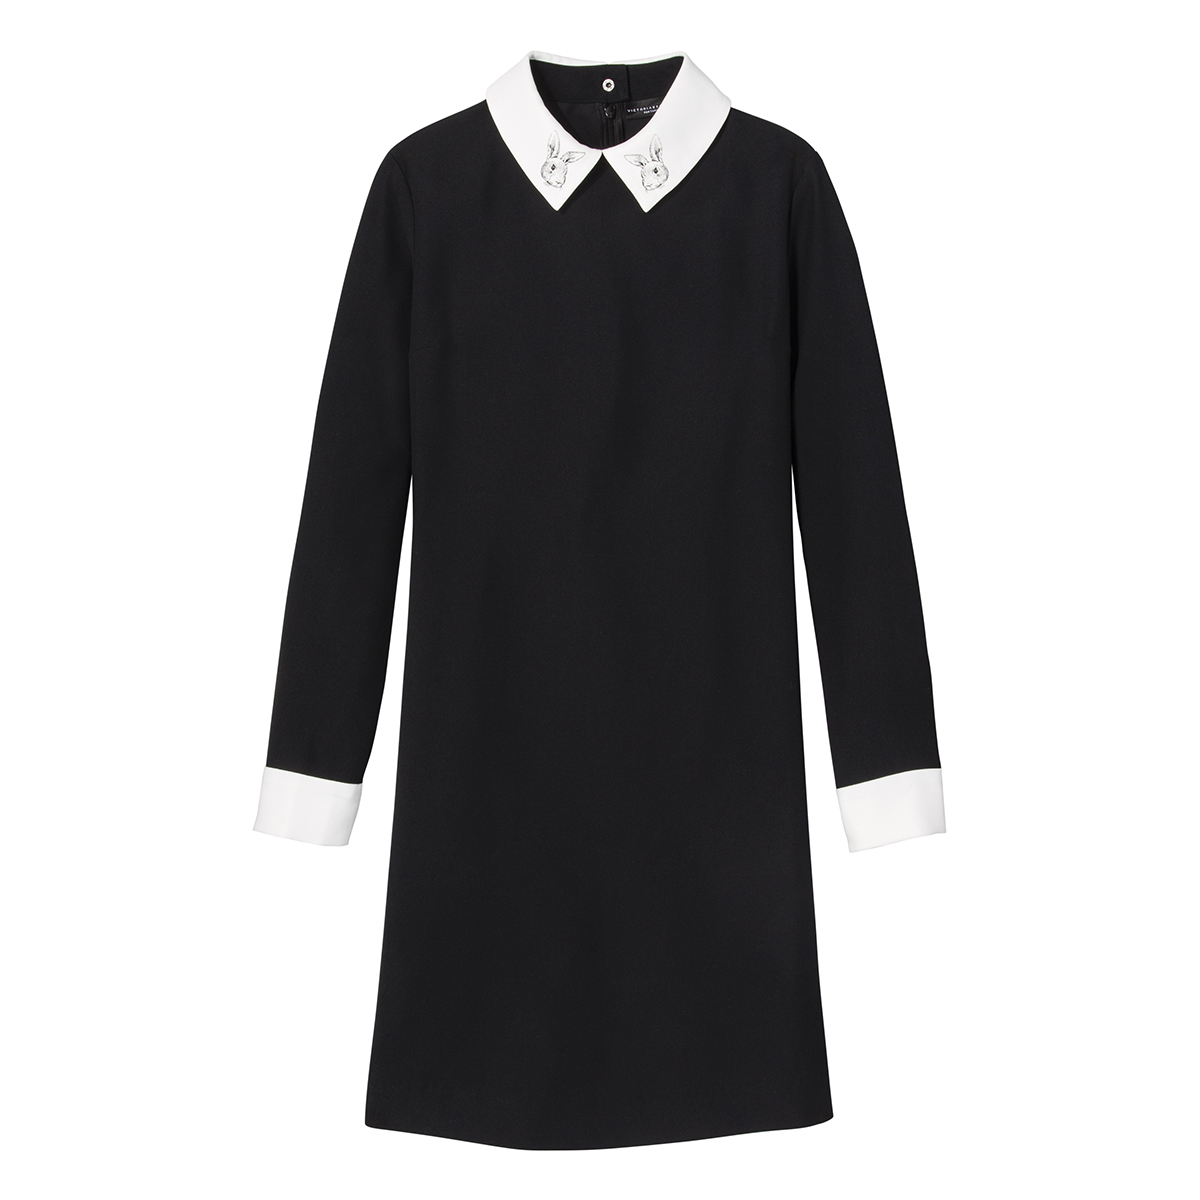 Black Collared Dress, $35